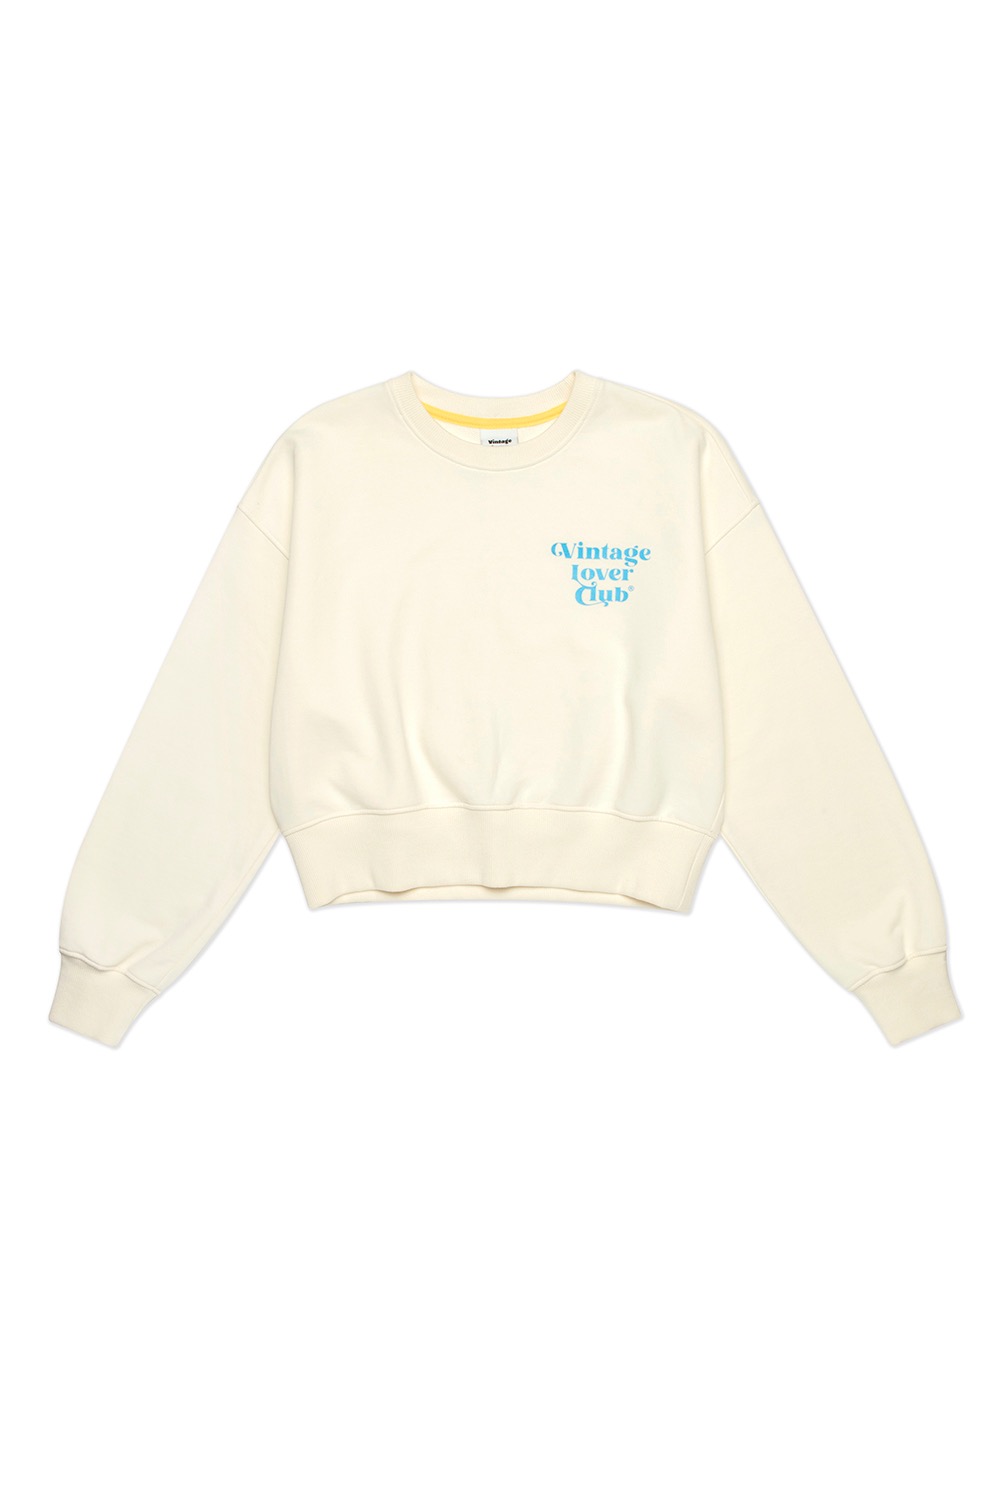 VLC Sweatshirt(cream)